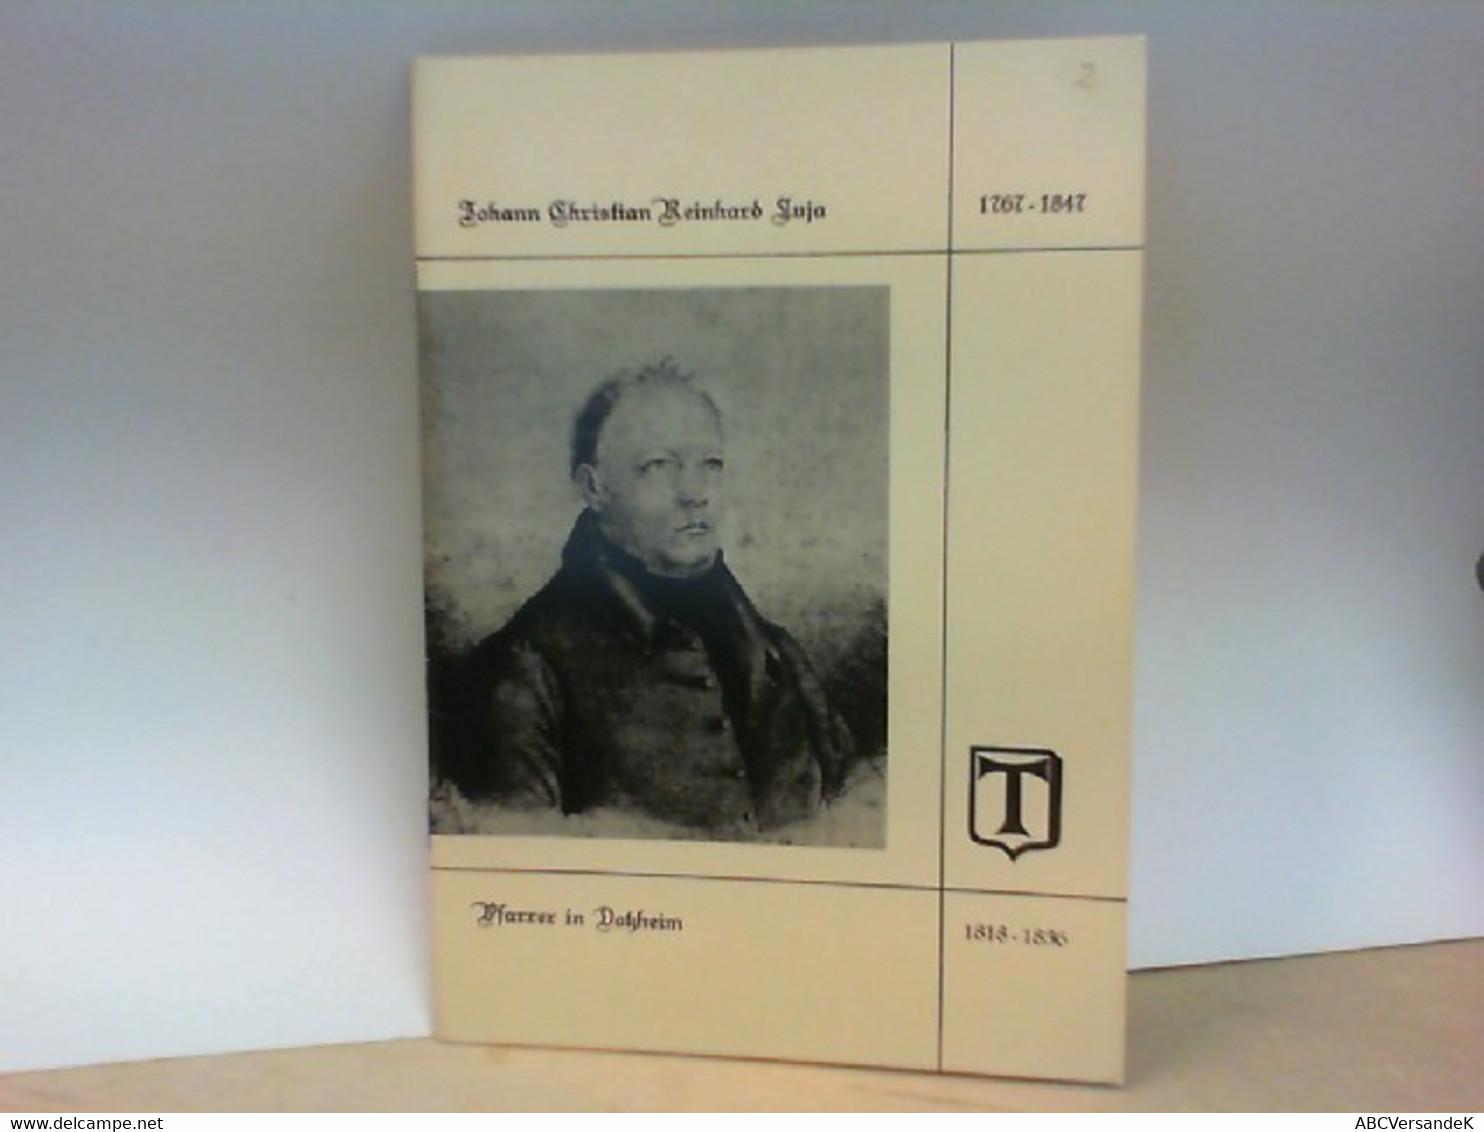 Johann Christian Reinhard Luja - Pfarrer Und Heimatforscher 1767 - 1847; Pfarrer In Dotzheim 1818 - 1836 - Hesse